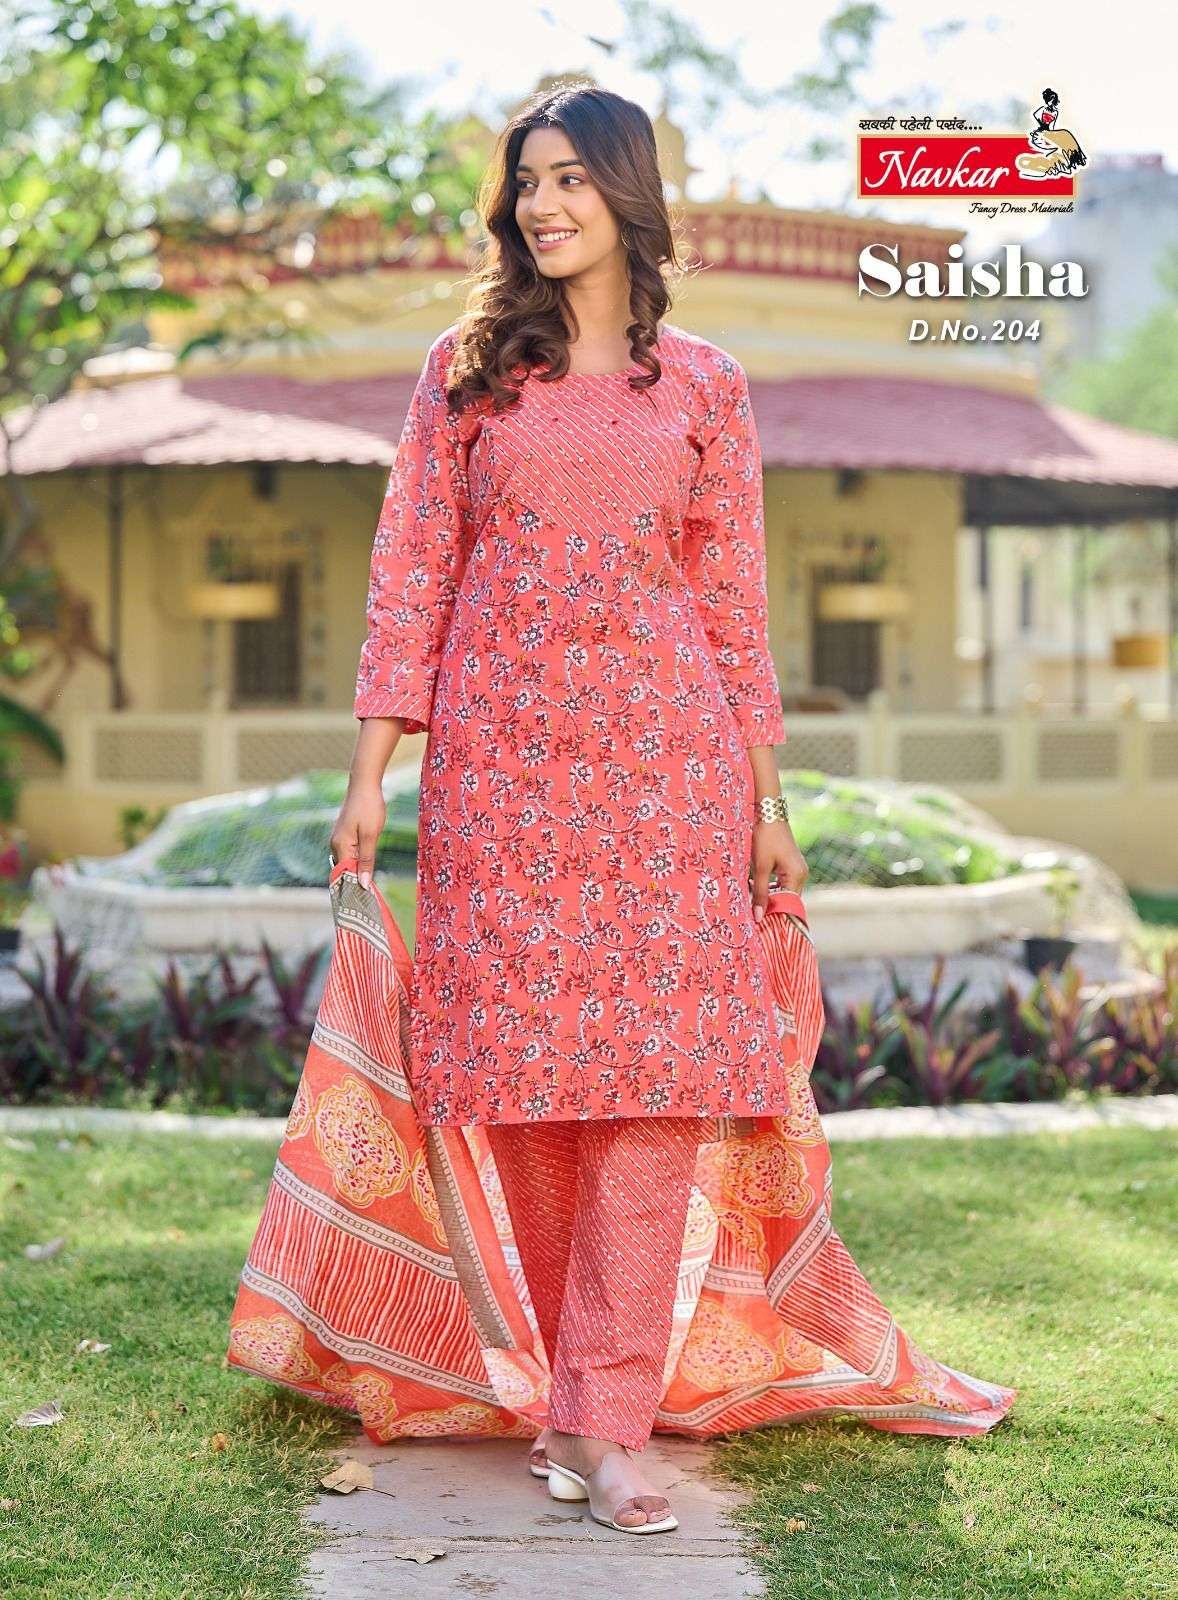 navkar saisha vol-2 201-210 series cotton designer readymade suits catalogue online dealer surat 